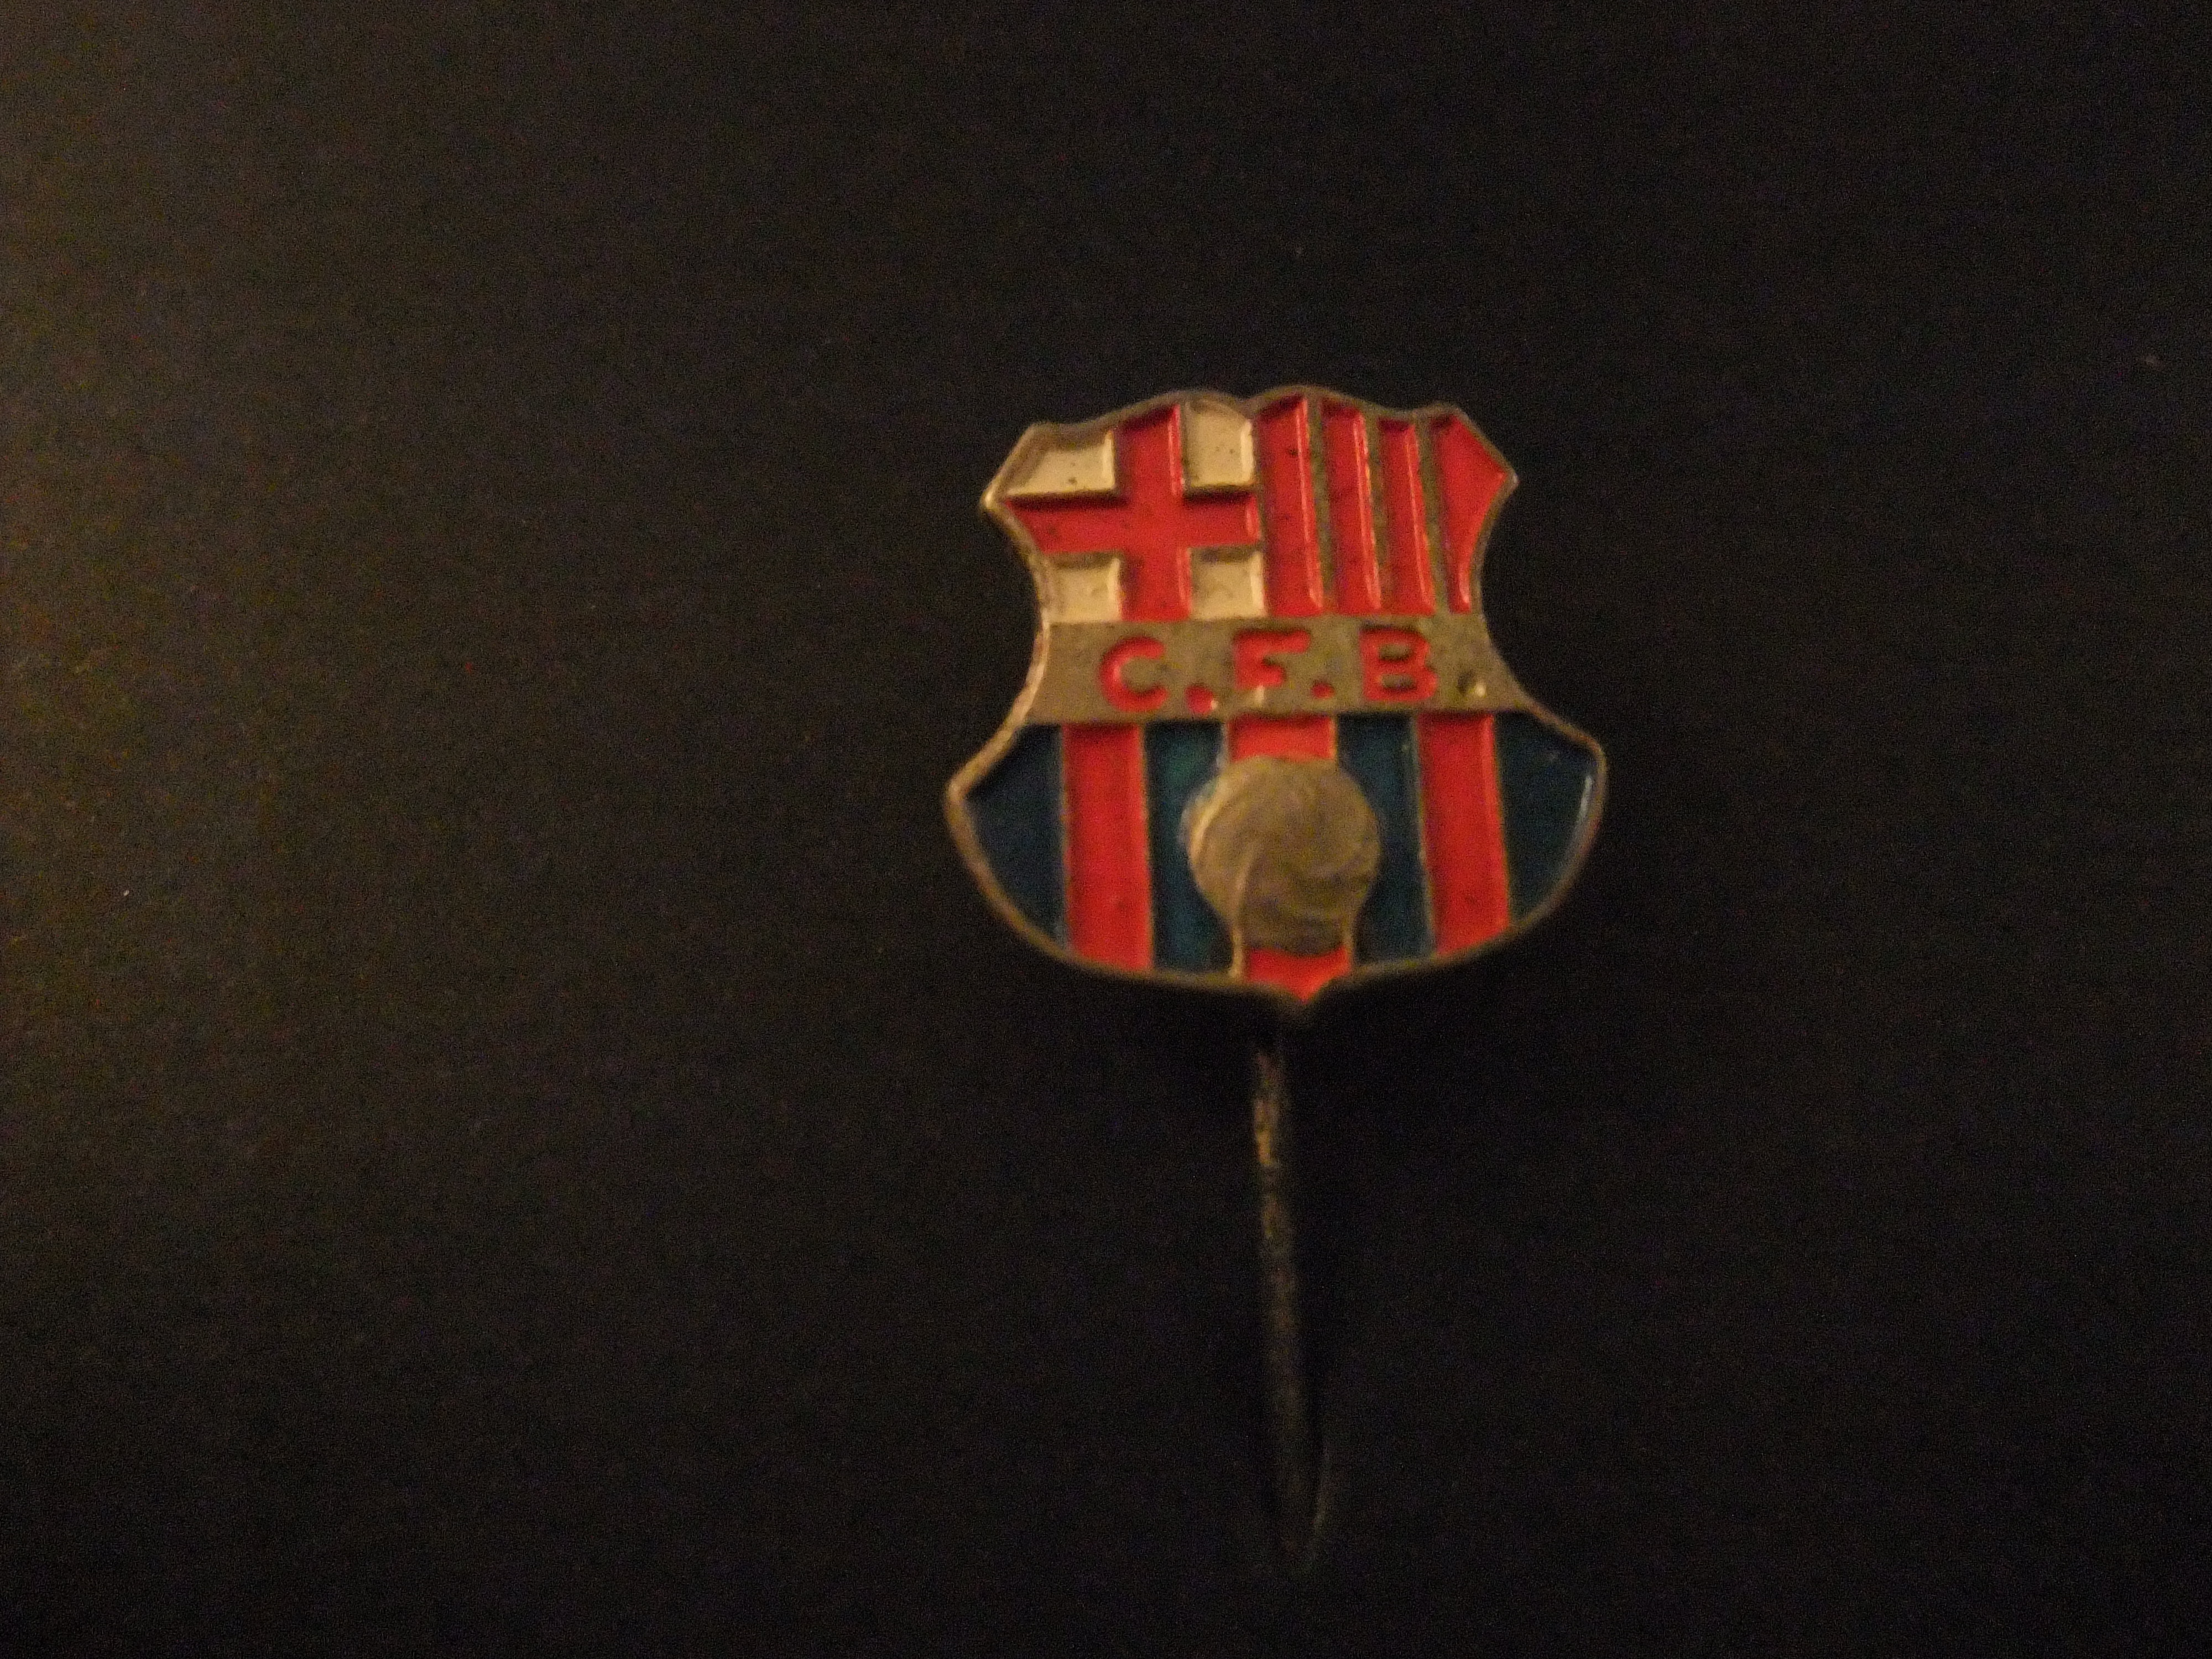 FC Barcelona (Barça ) voetbalclub Spanje logo